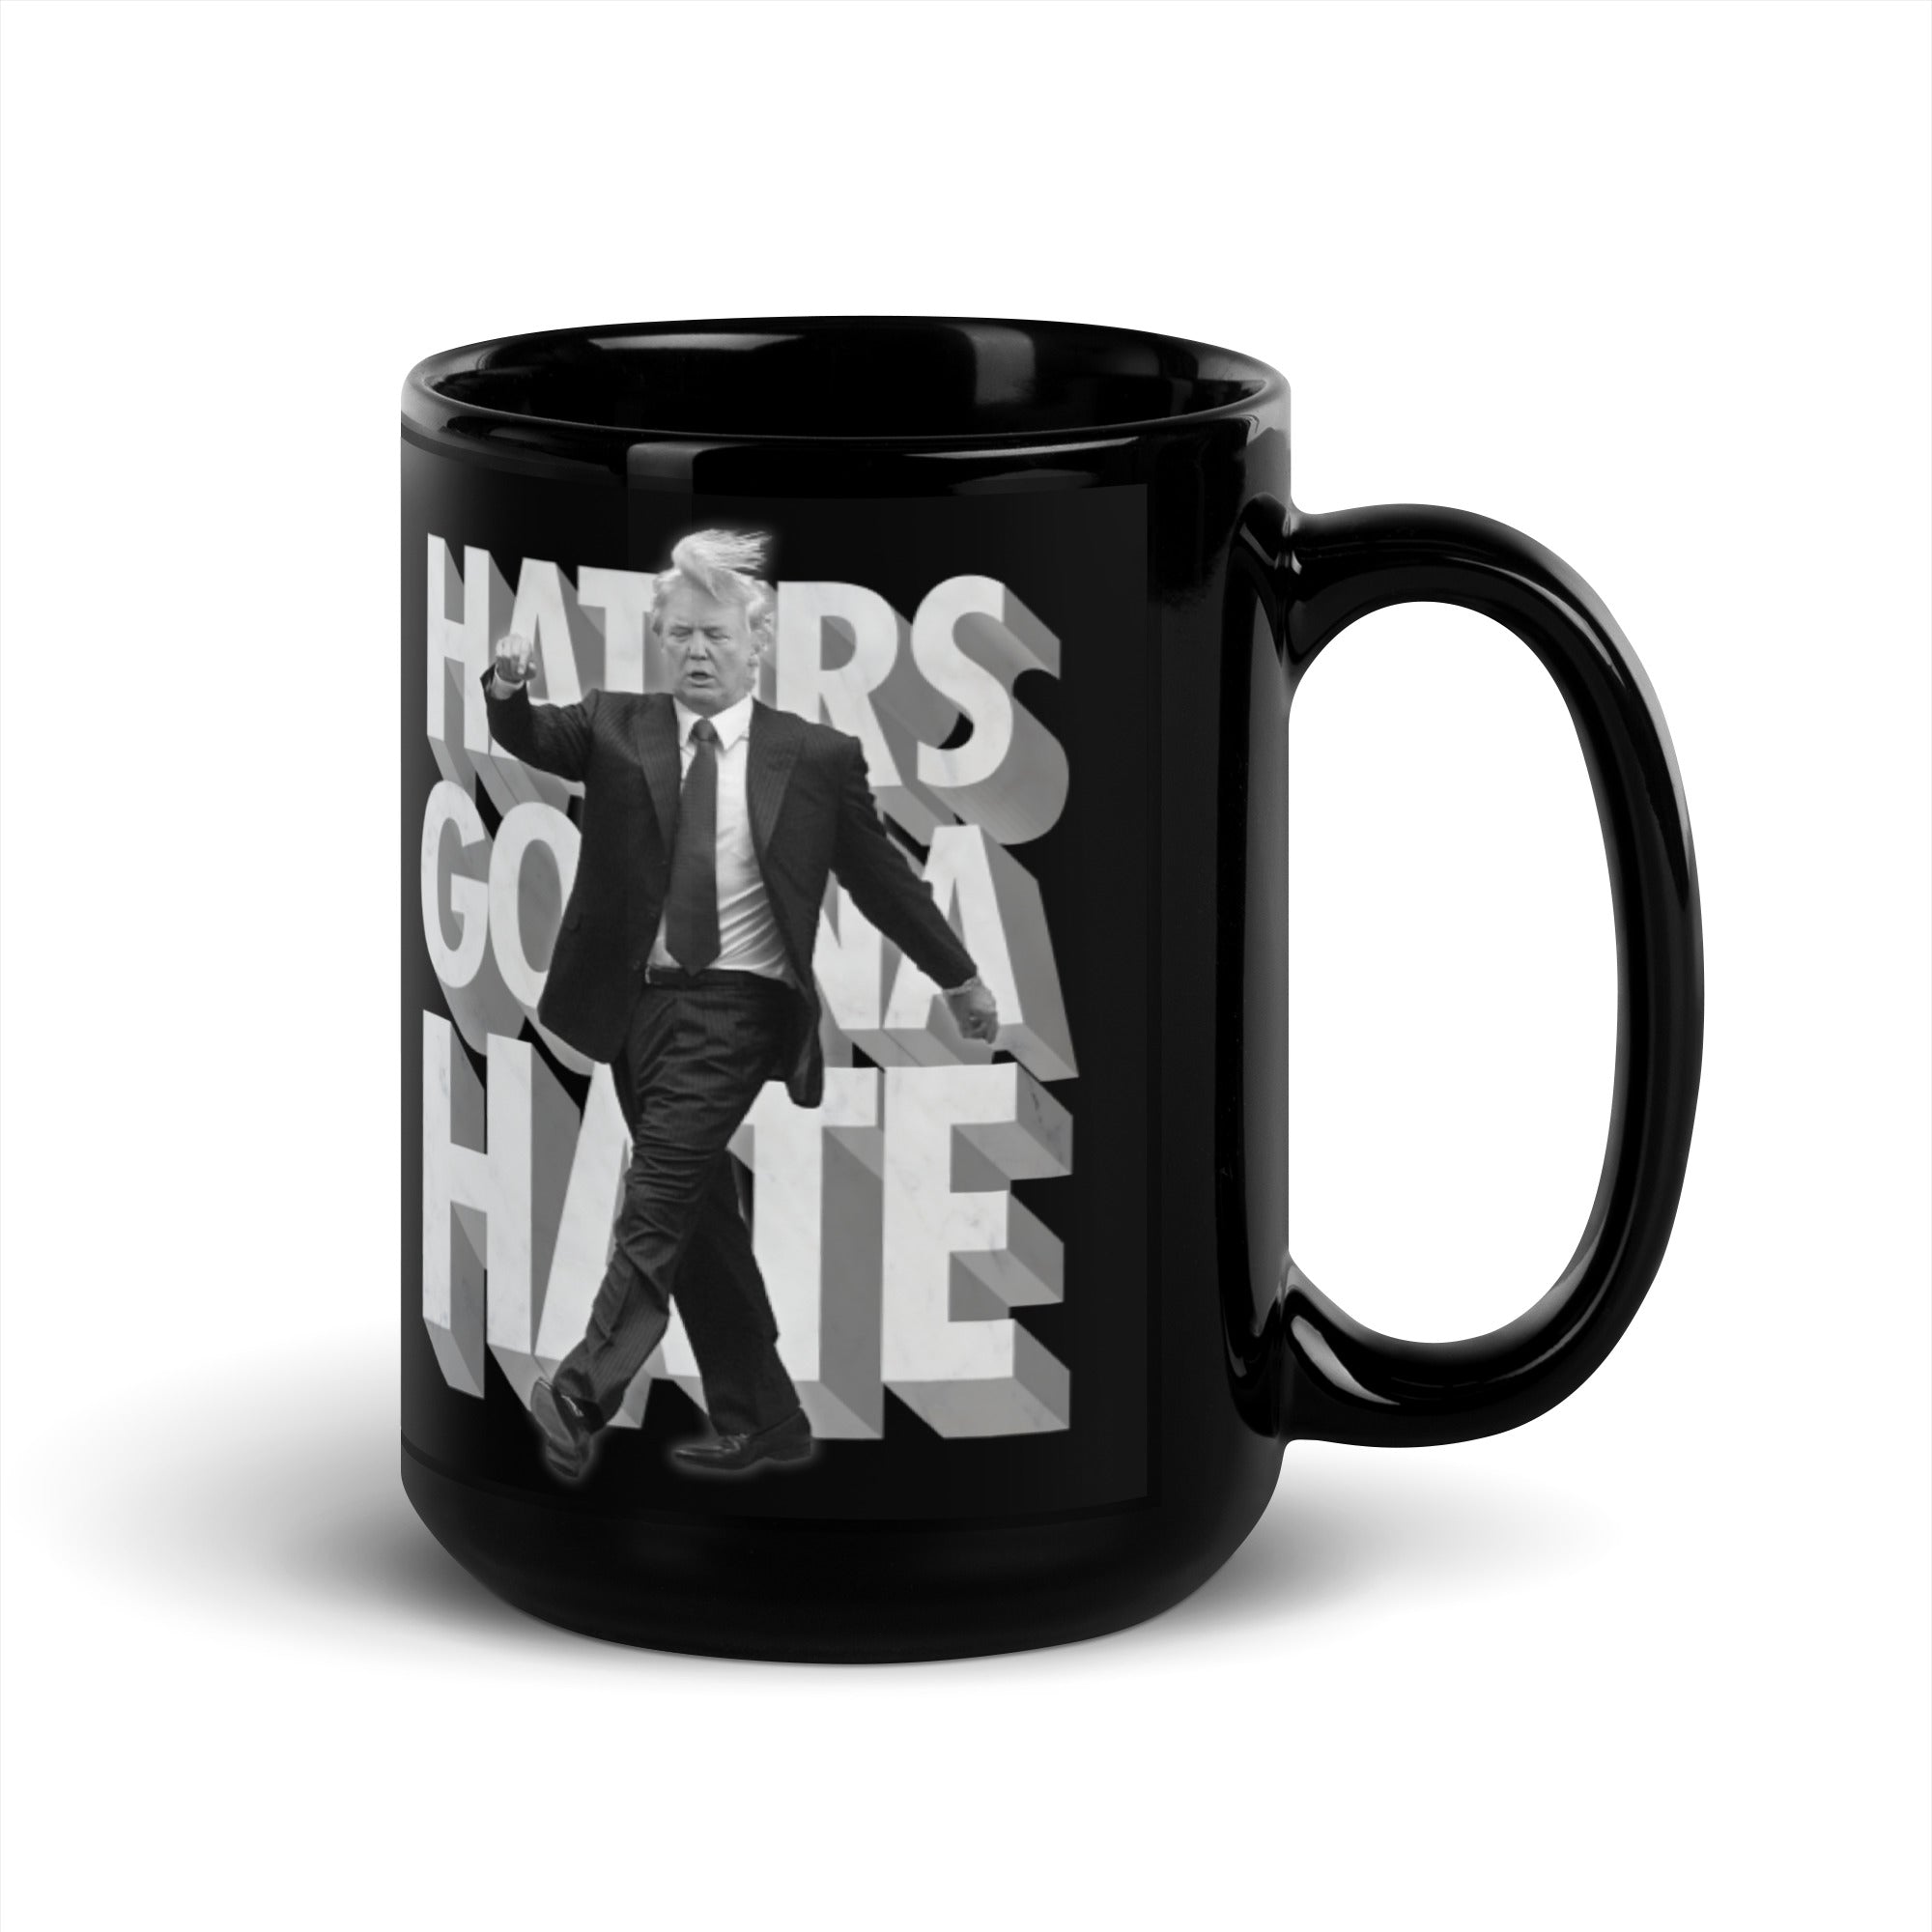 Trump Haters Gonna Hate Coffee Mug